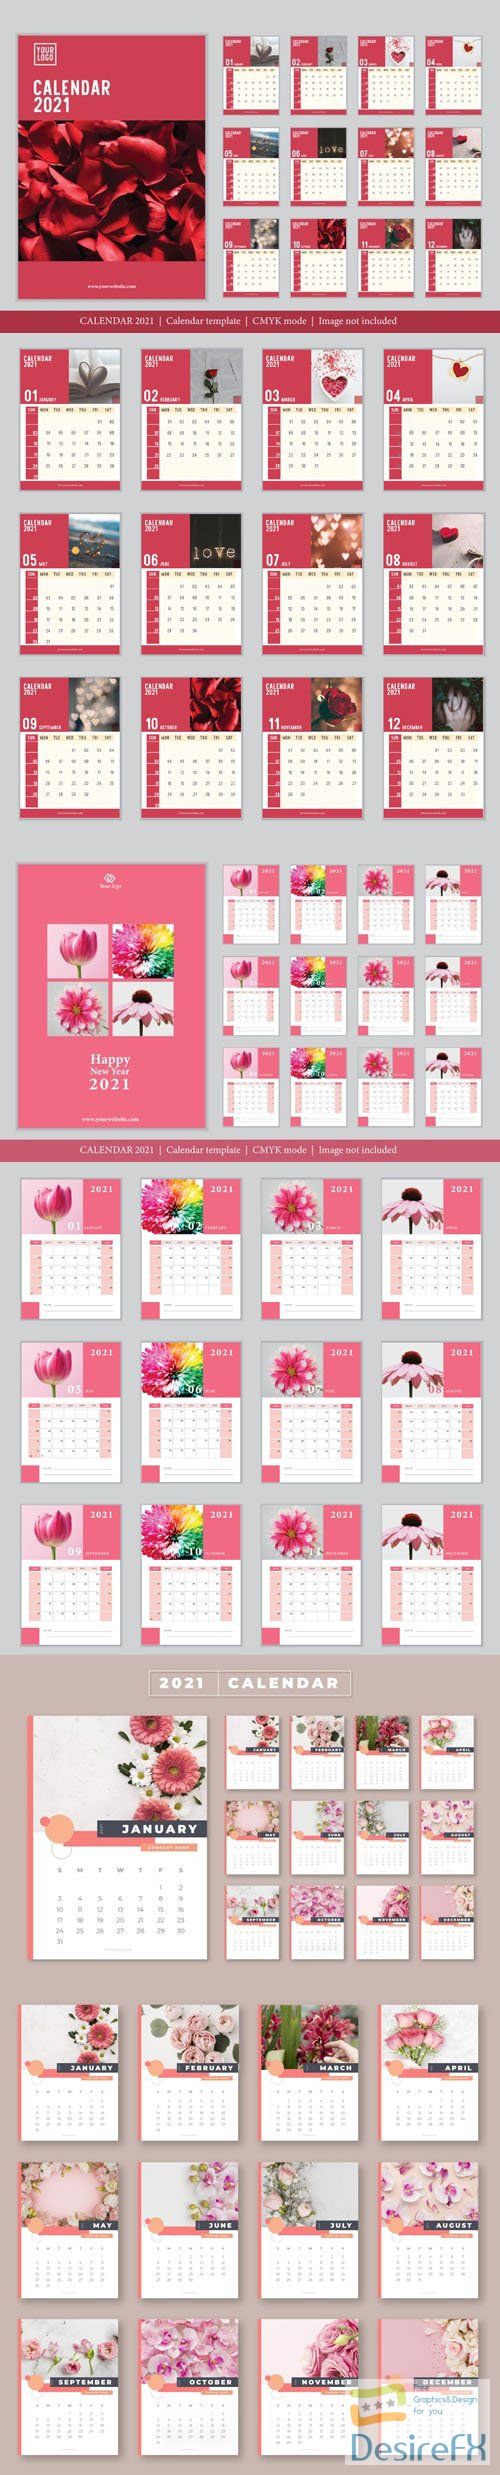 3 Vector Calendars 2021 in Romantic & Rosy Styles